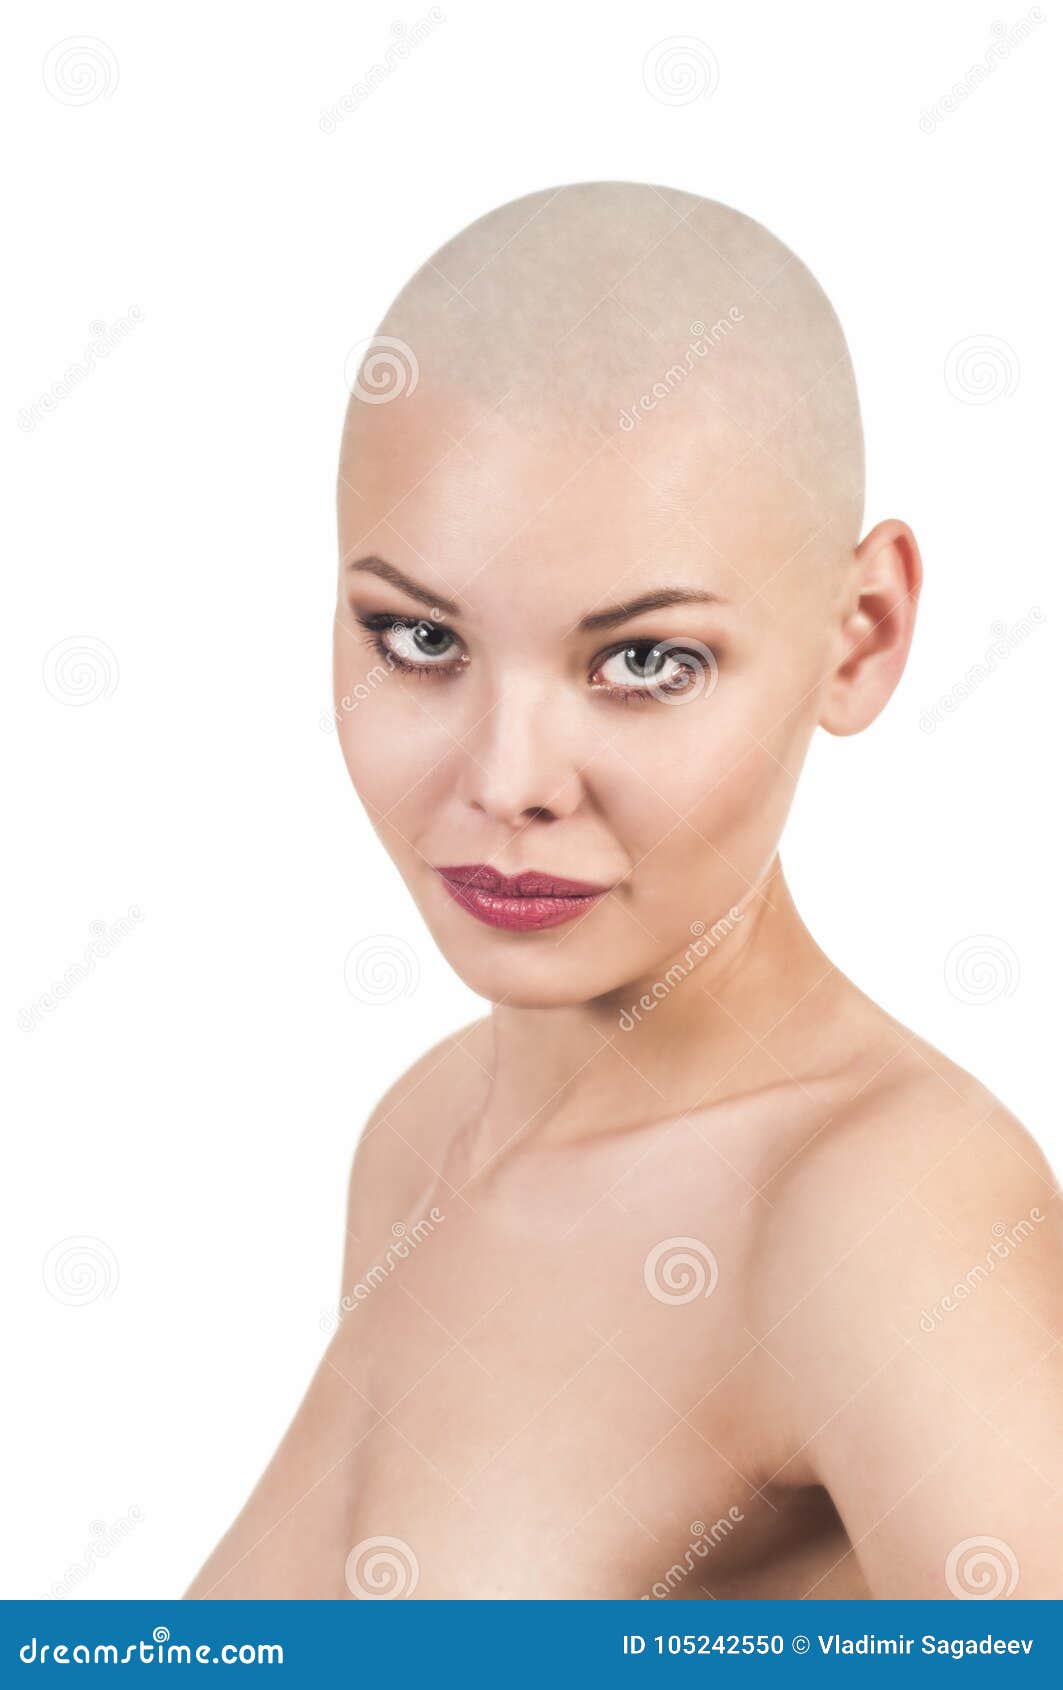 Bald head asian girl naked